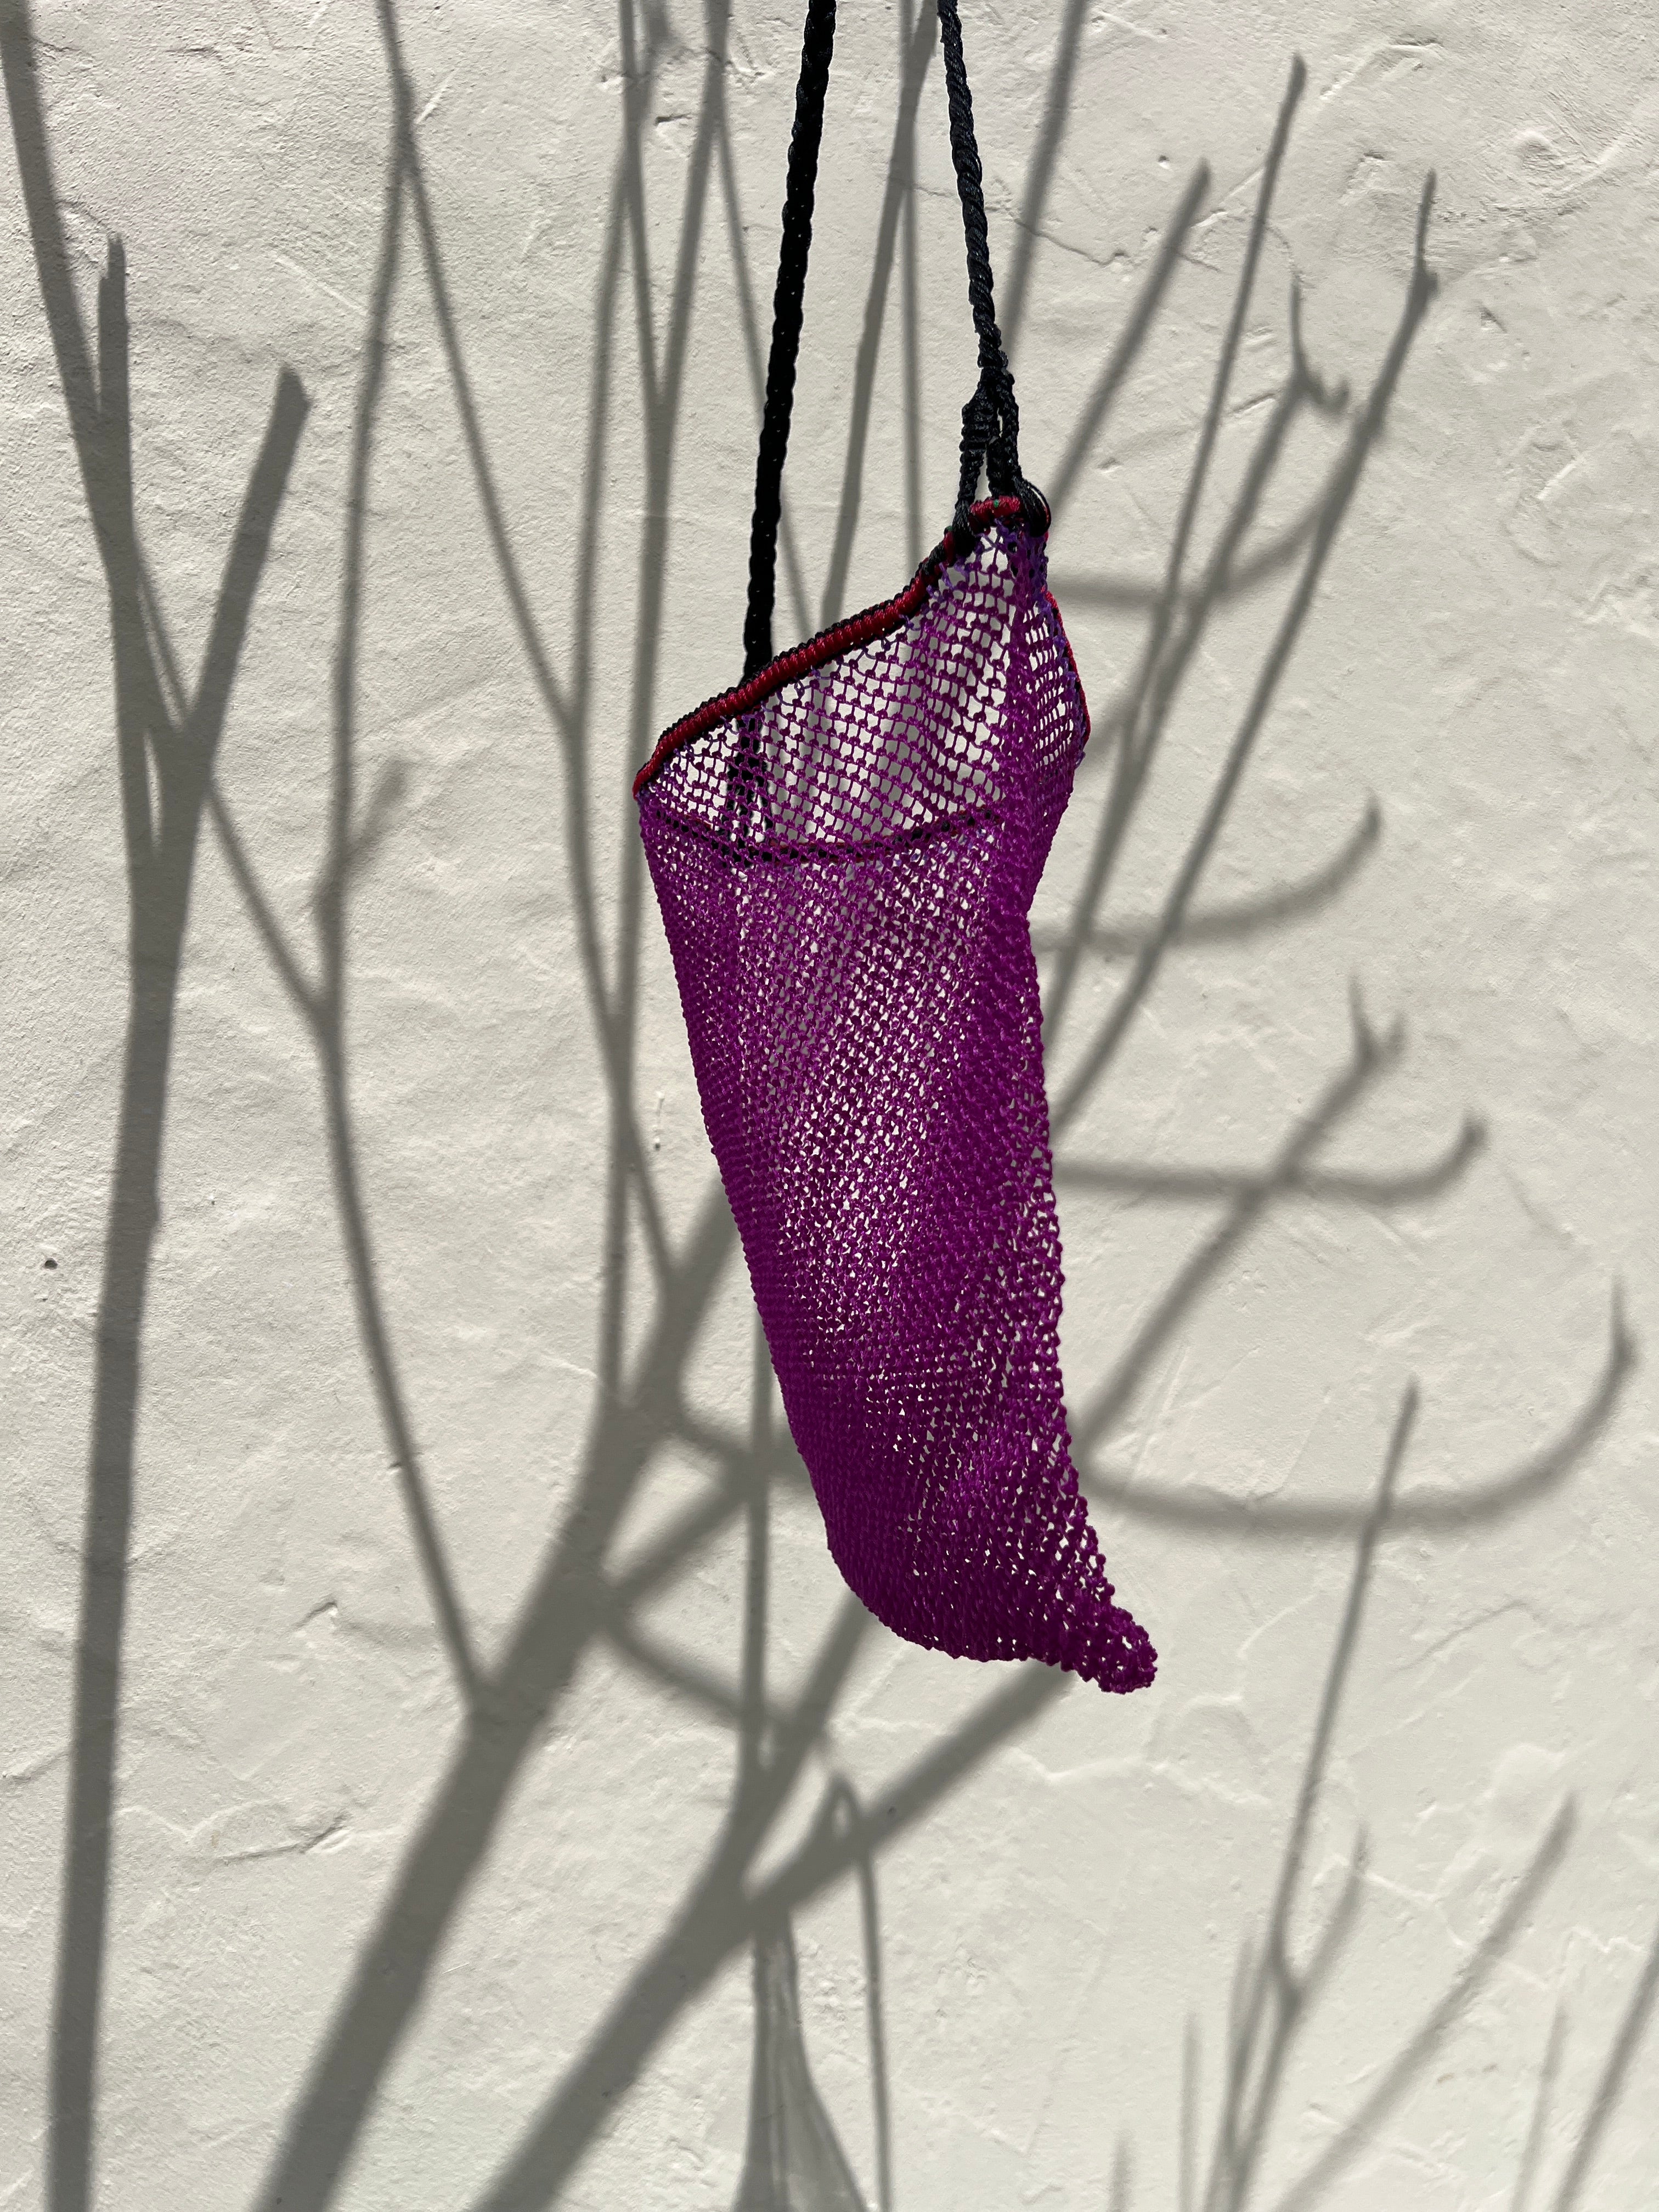 Future Nomads Bags Handmade Nylon Bag Purple